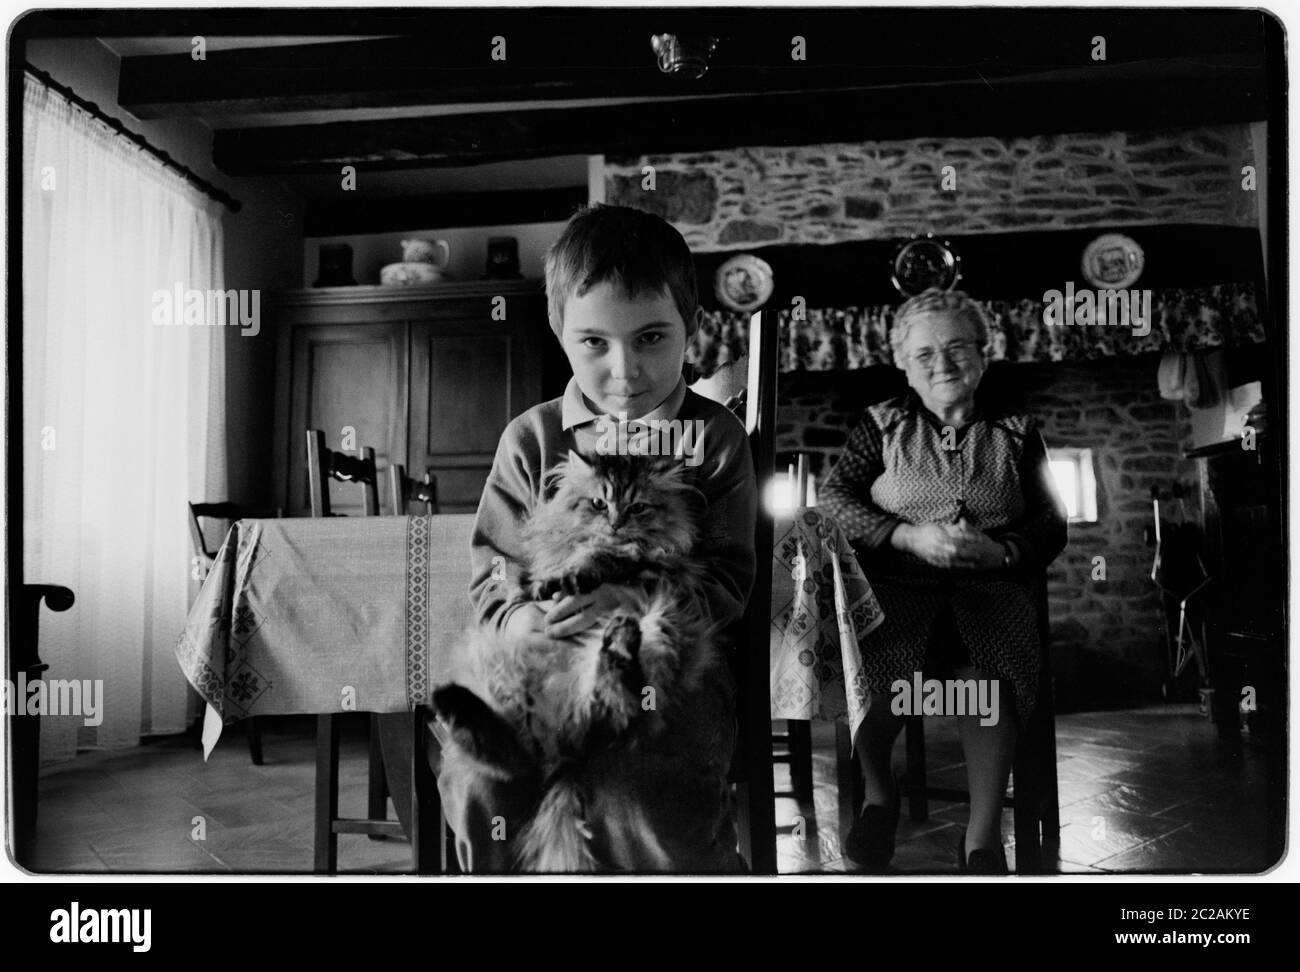 Farmers Sohn Katze und Mutter, Correze, Frankreich 1988 Stockfoto